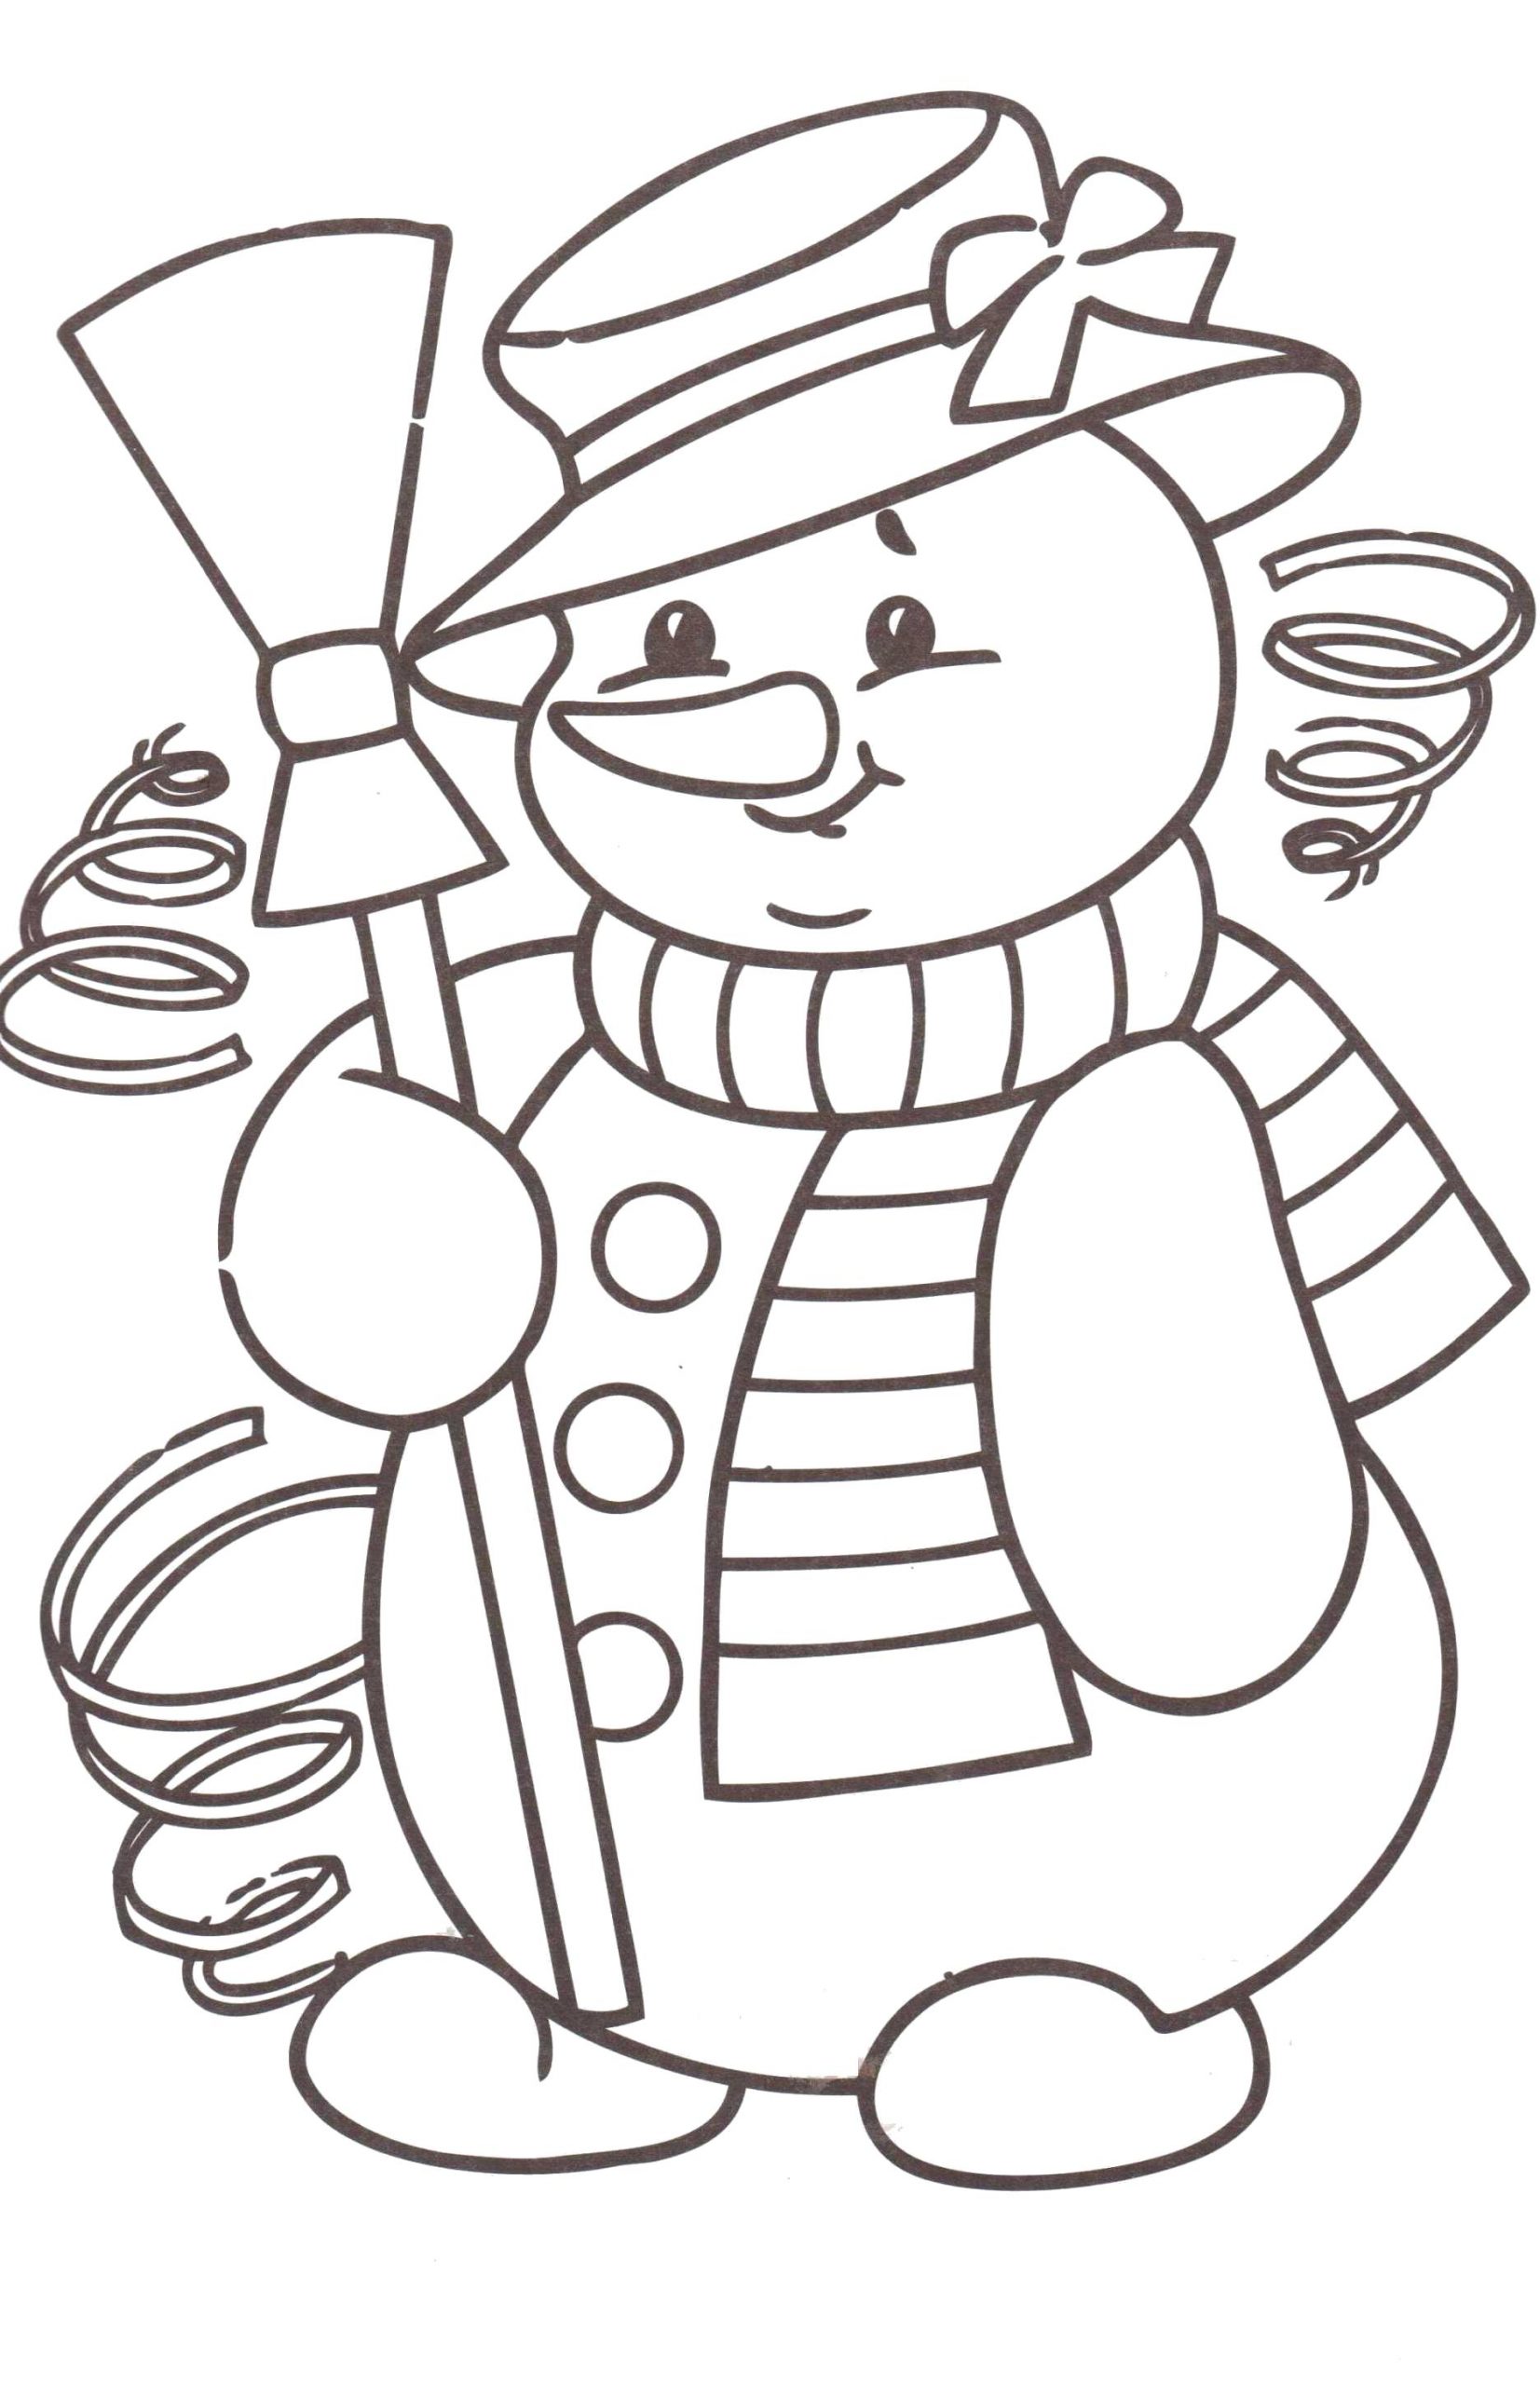 Snowman in a striped scarf